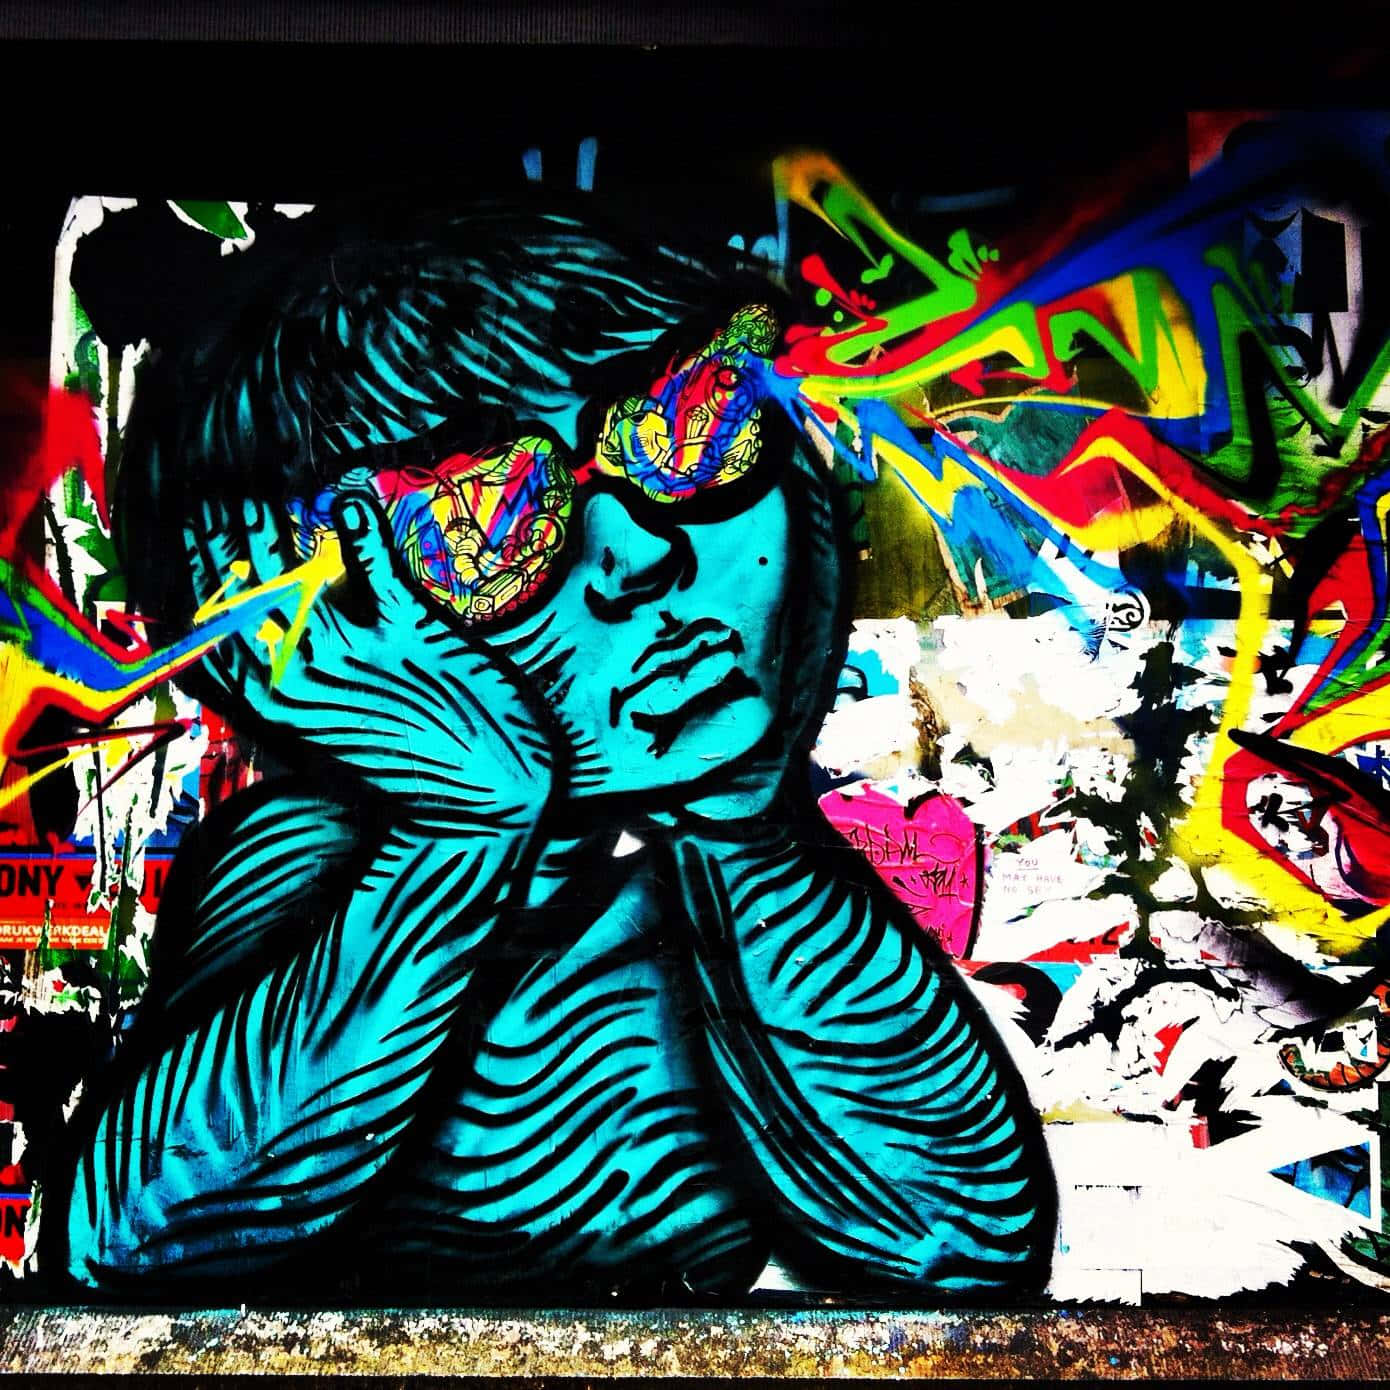 "Creativity Unveiled Through Graffiti" Wallpaper